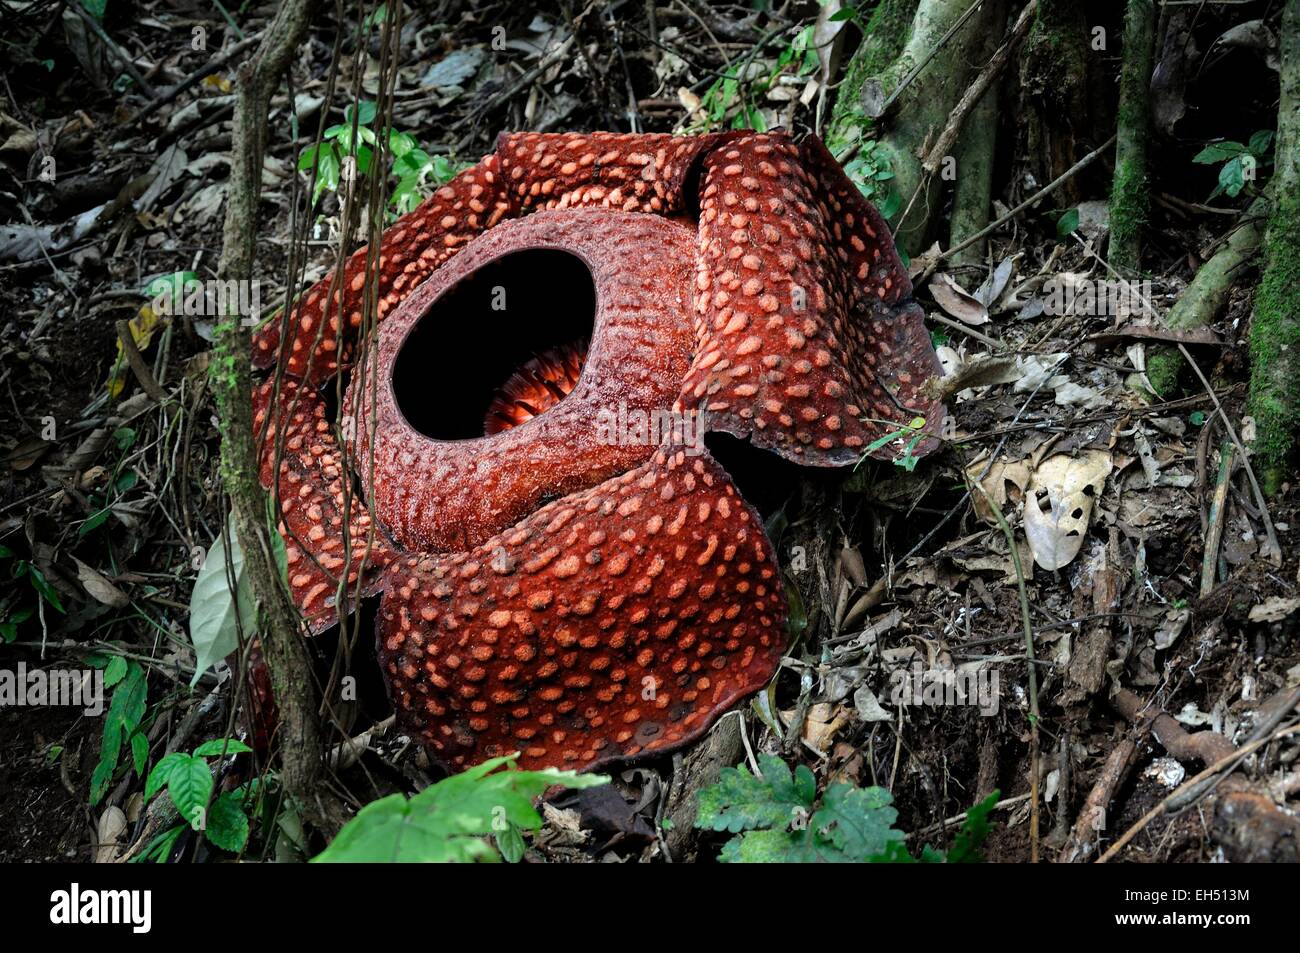 Indonesia, West Sumatra, Bukittinggi, Lembah Anai Nature Reserve, the Rafflesia, the largest flower in the world found in the rainforest Stock Photo